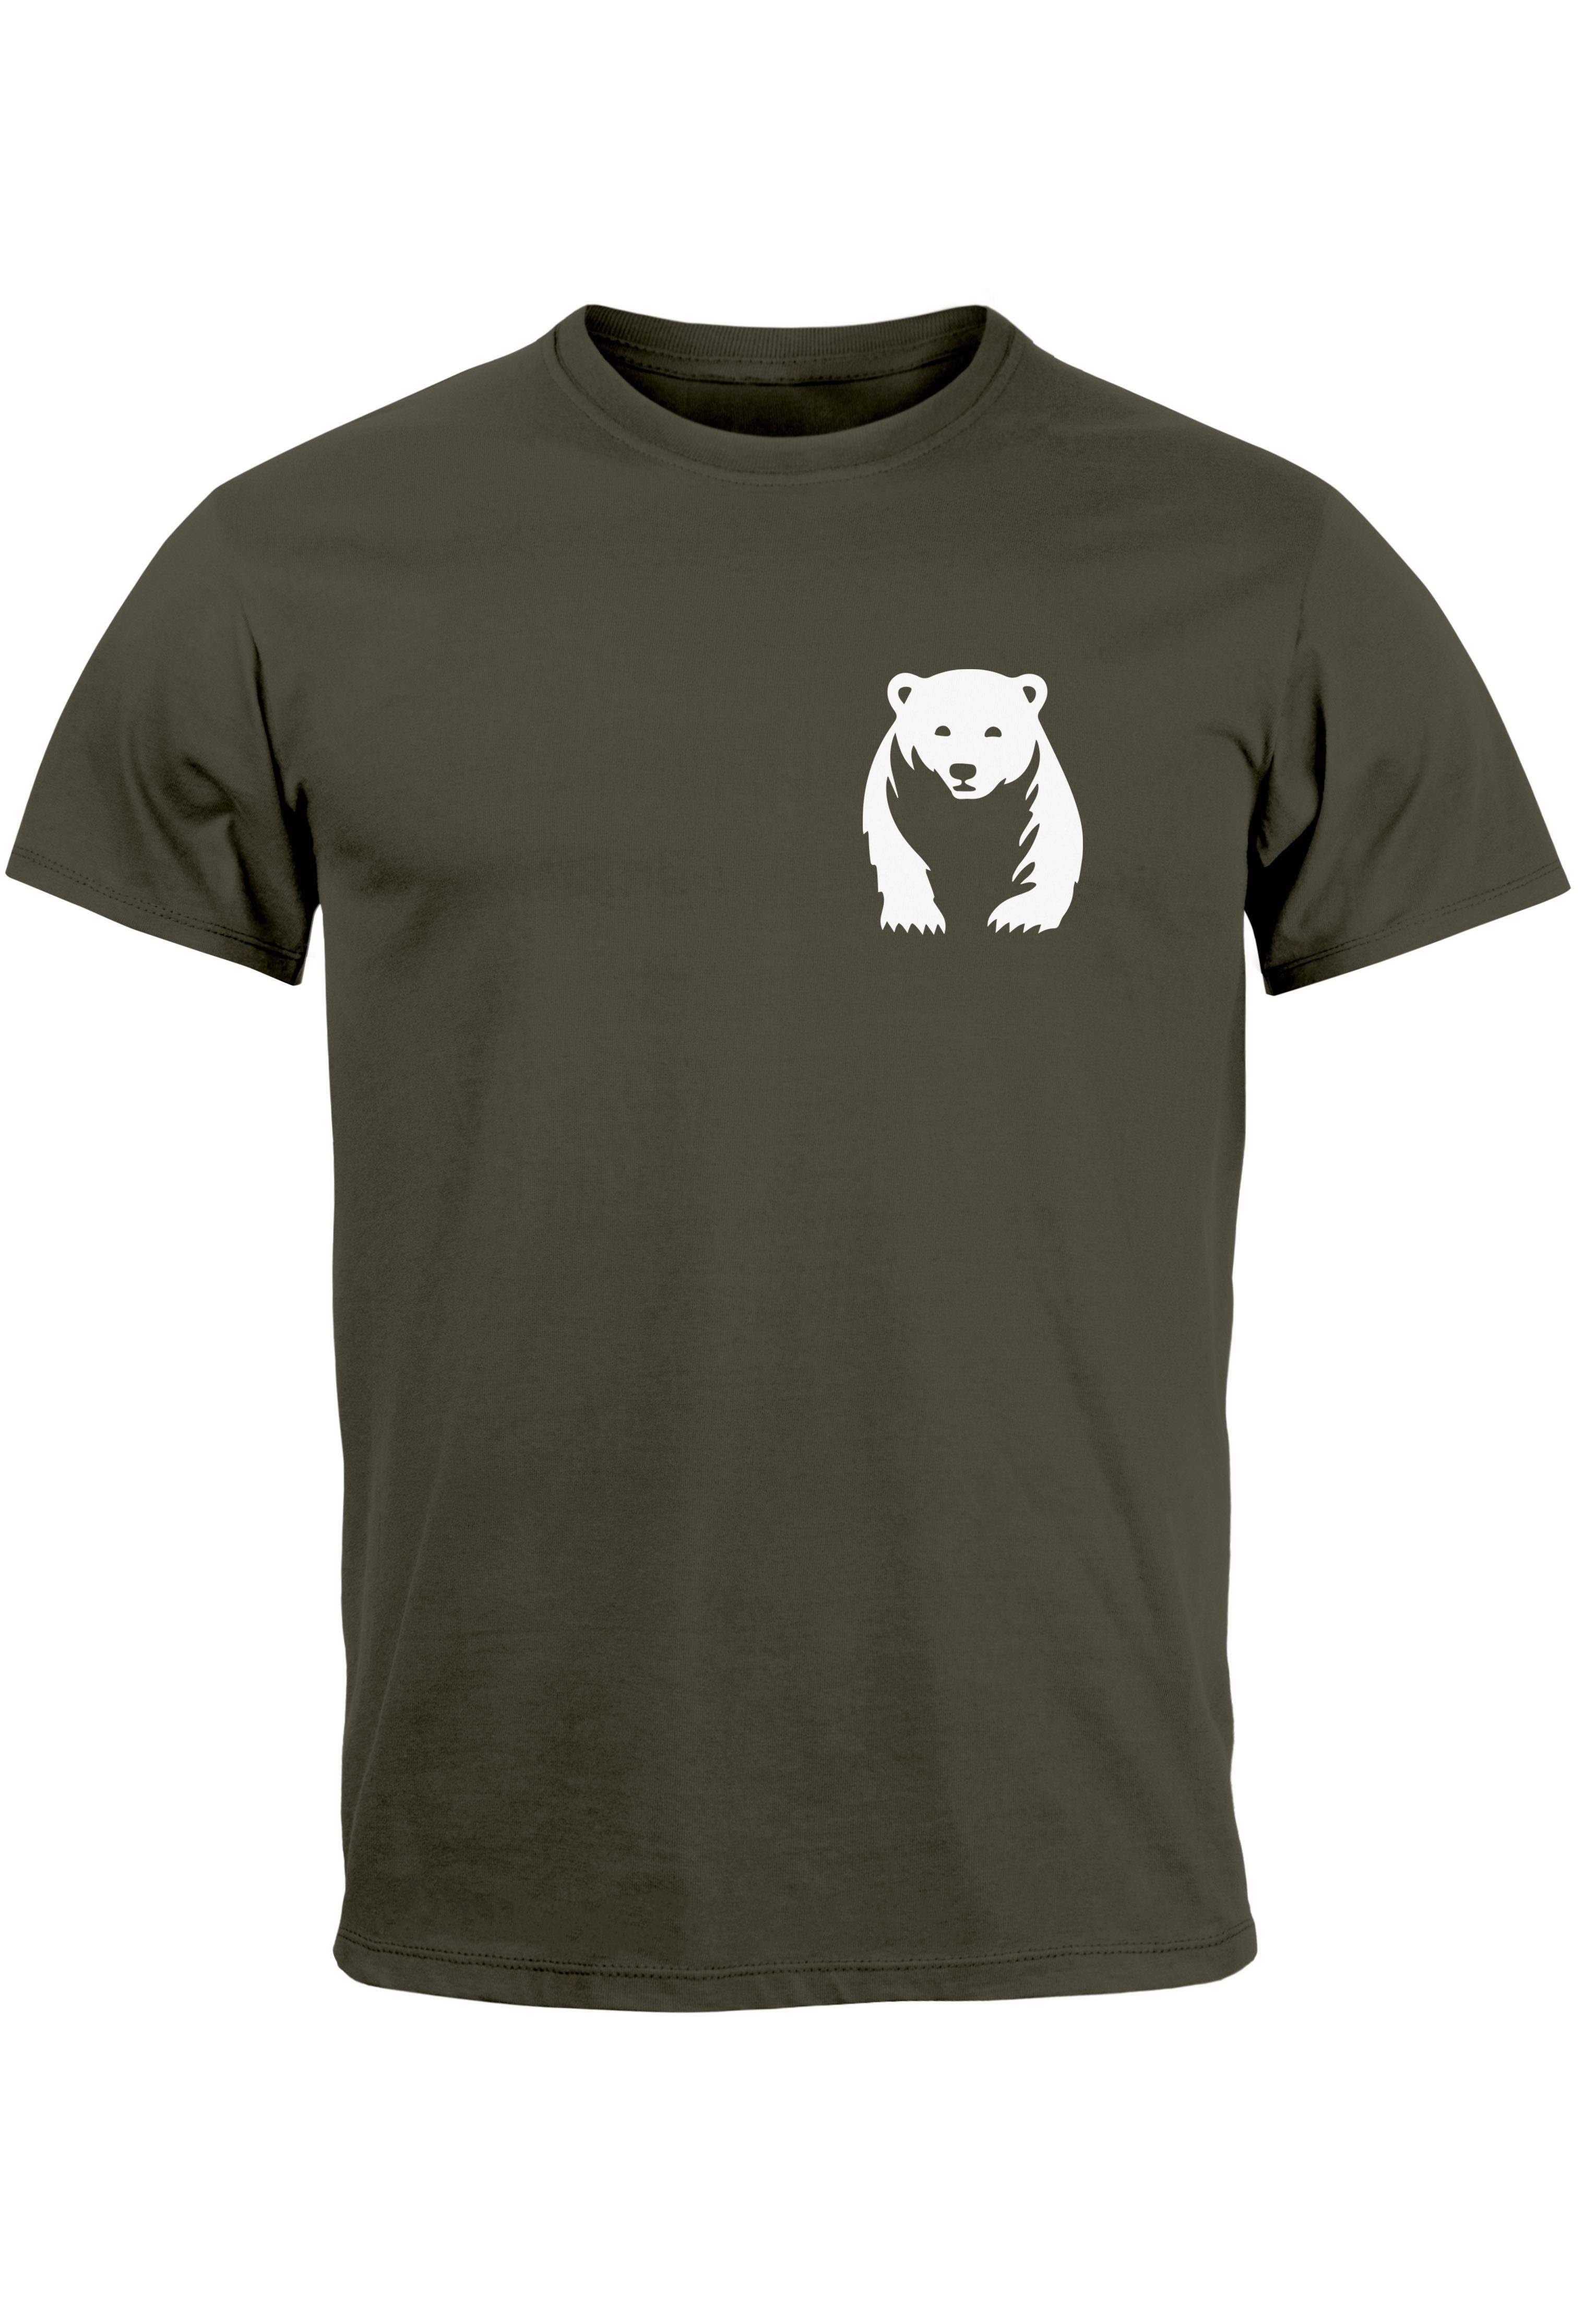 Bär Print T-Shirt Stre mit Print-Shirt Aufdruck Brustprint Outdoor Logo army Fashion Herren Natur Neverless